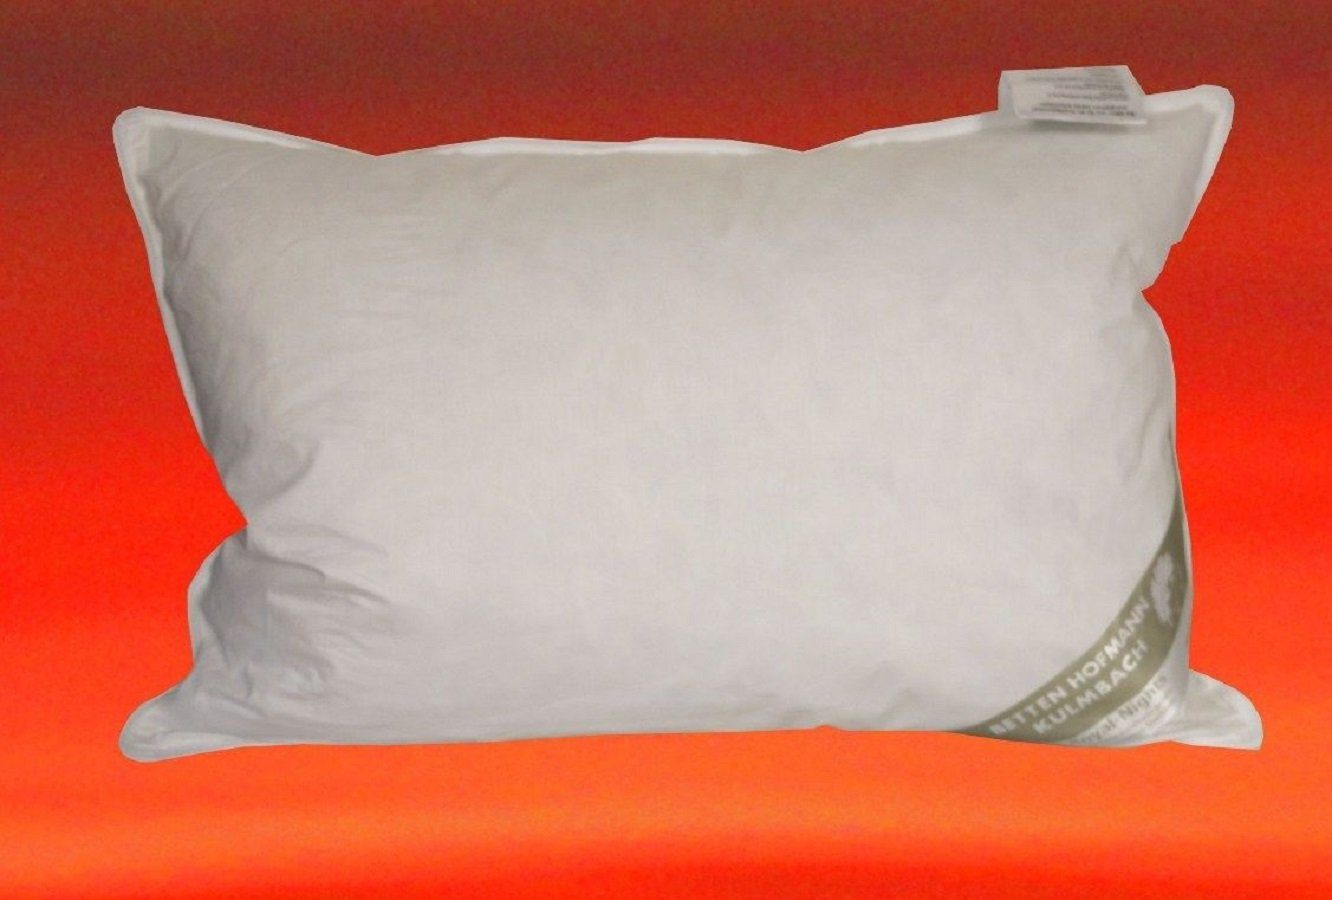 weich, Hofmann, Betten Daunenkissen Baumwolle, Rückenschläfer, Kopfkissen, 43x63cm 60% Bezug: Kopfkissen 100% Daunen angenehm Kopfkissen Seitenschläfer JAPAN Kissen